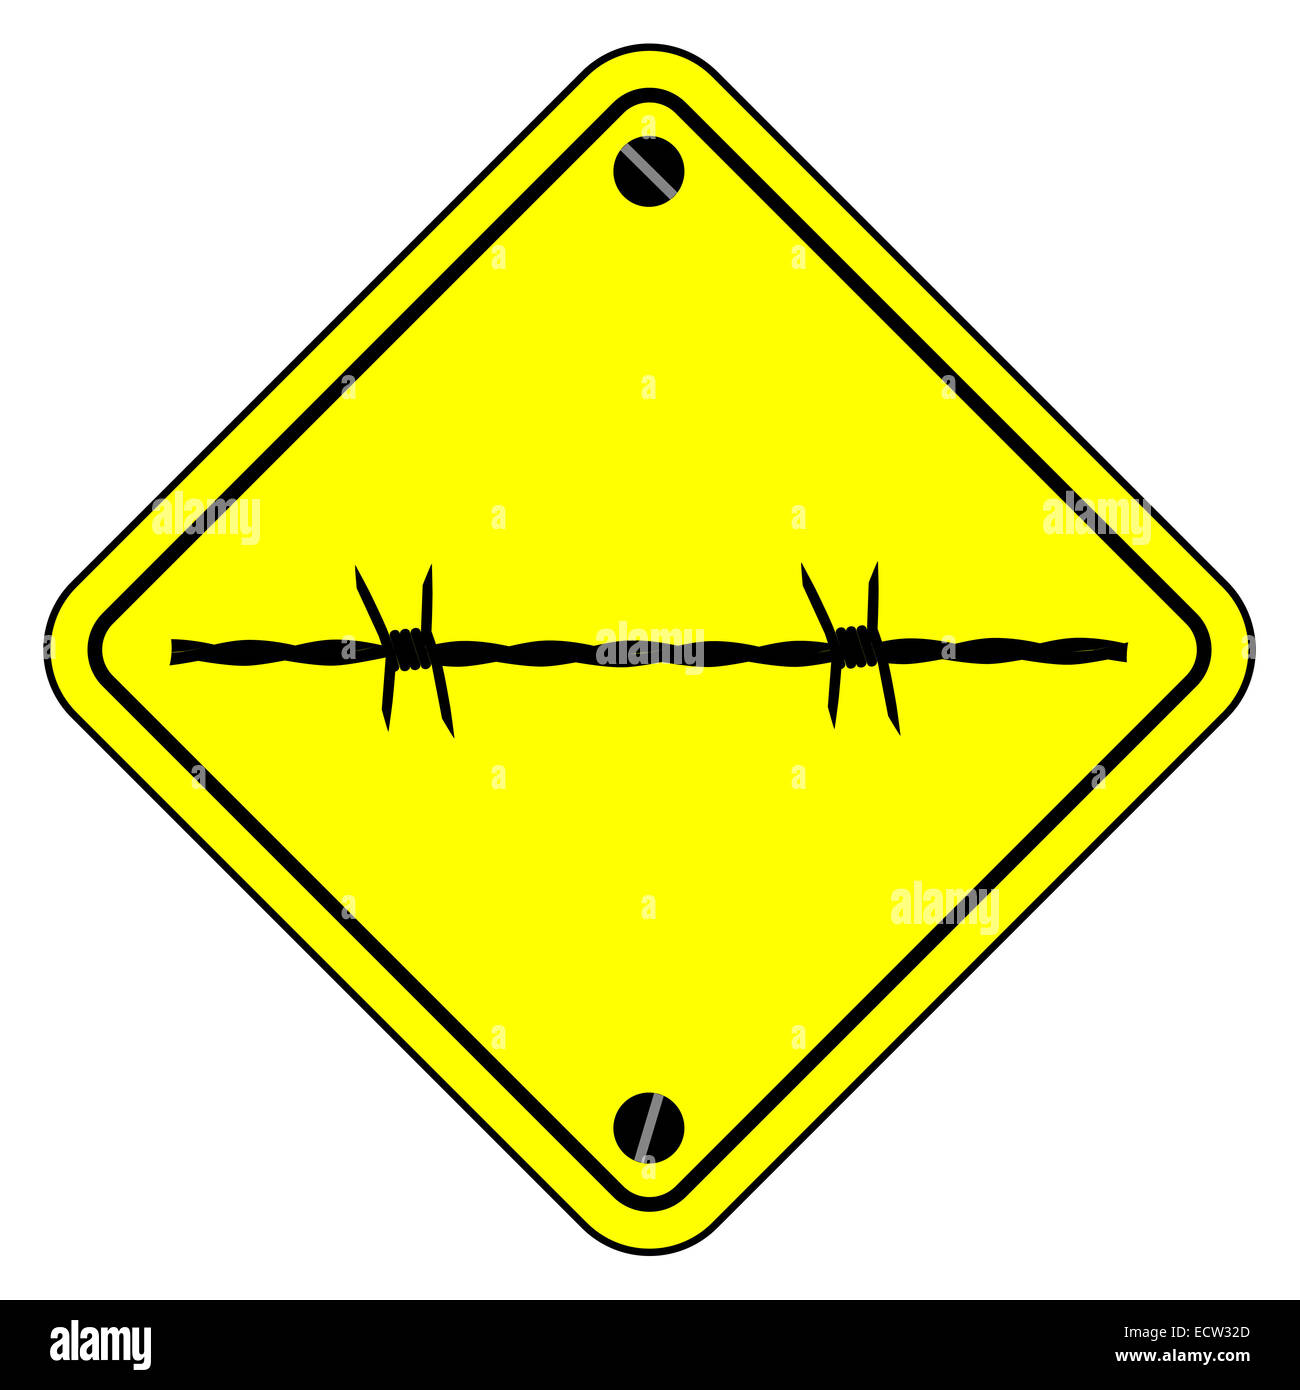 Warning razor wire safety sign 